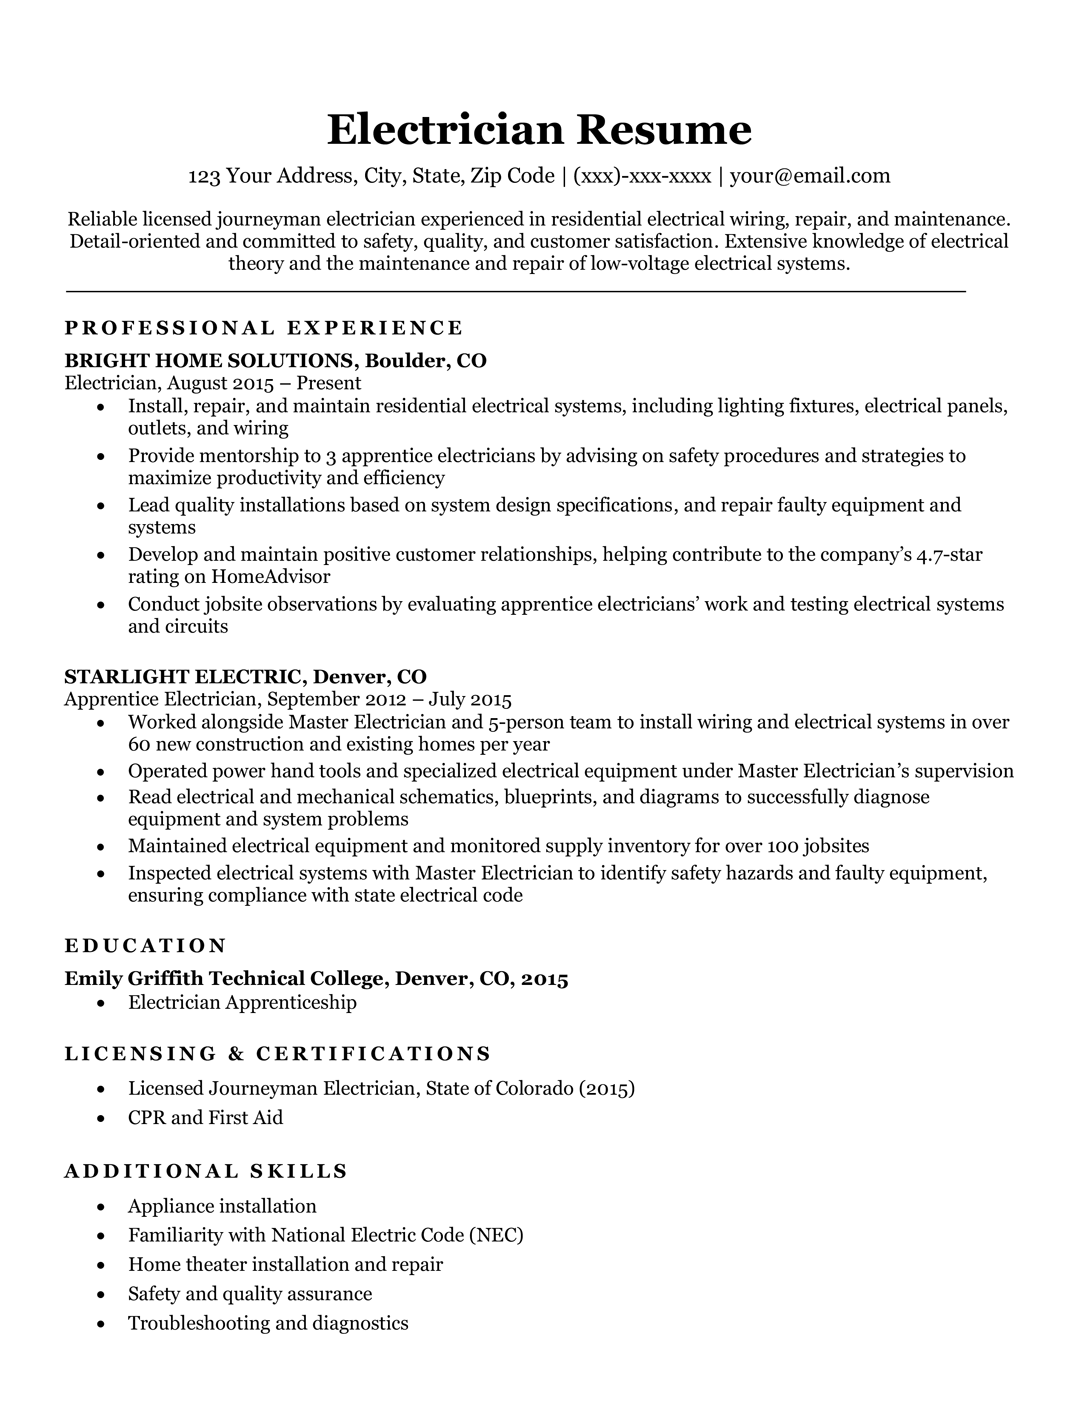 Electrician resume sample